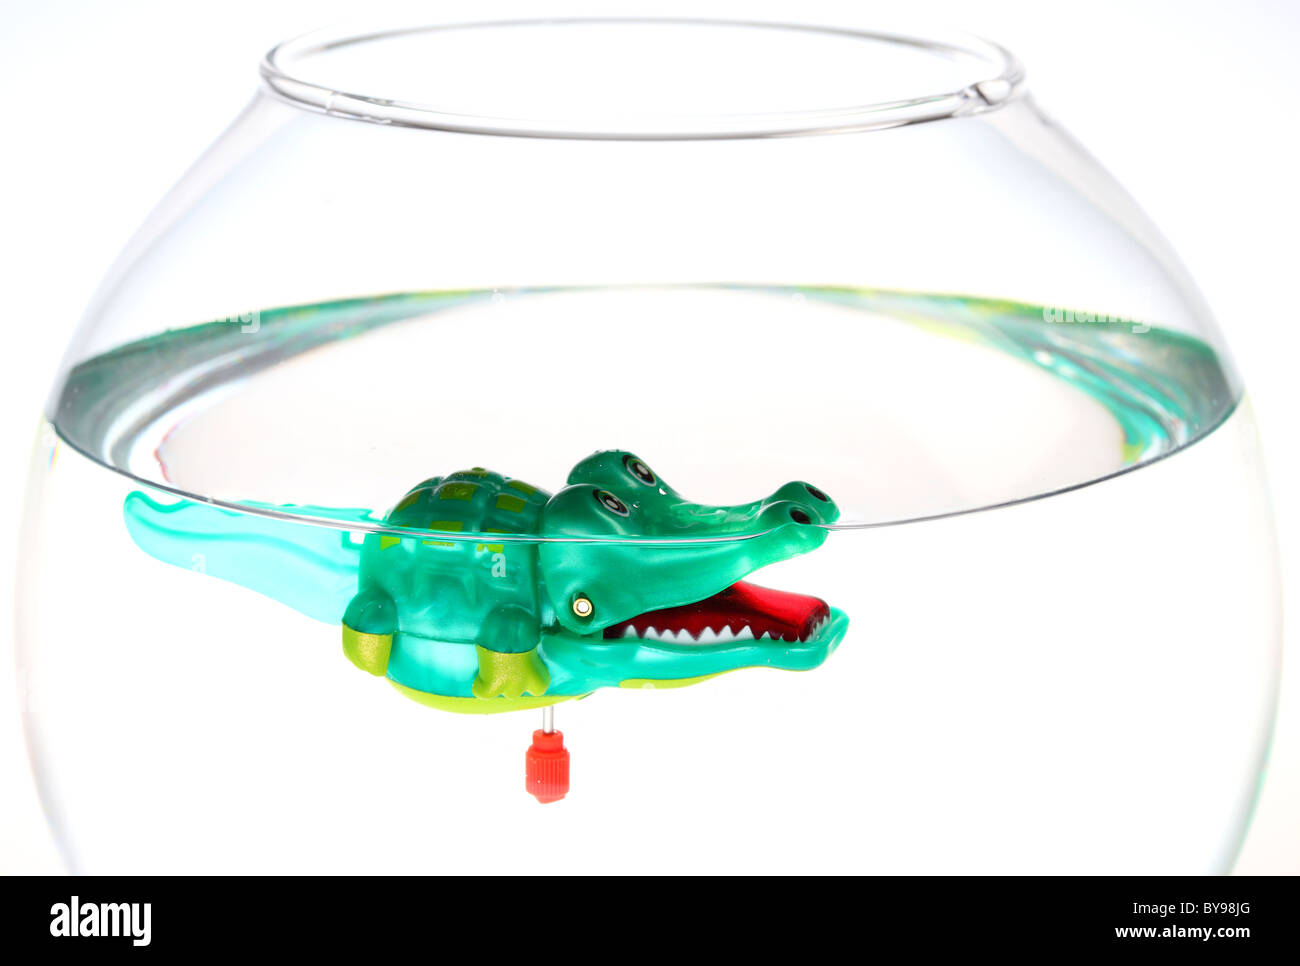 https://c8.alamy.com/comp/BY98JG/alligator-crocodile-wind-up-toy-plastic-in-a-fish-bowl-BY98JG.jpg